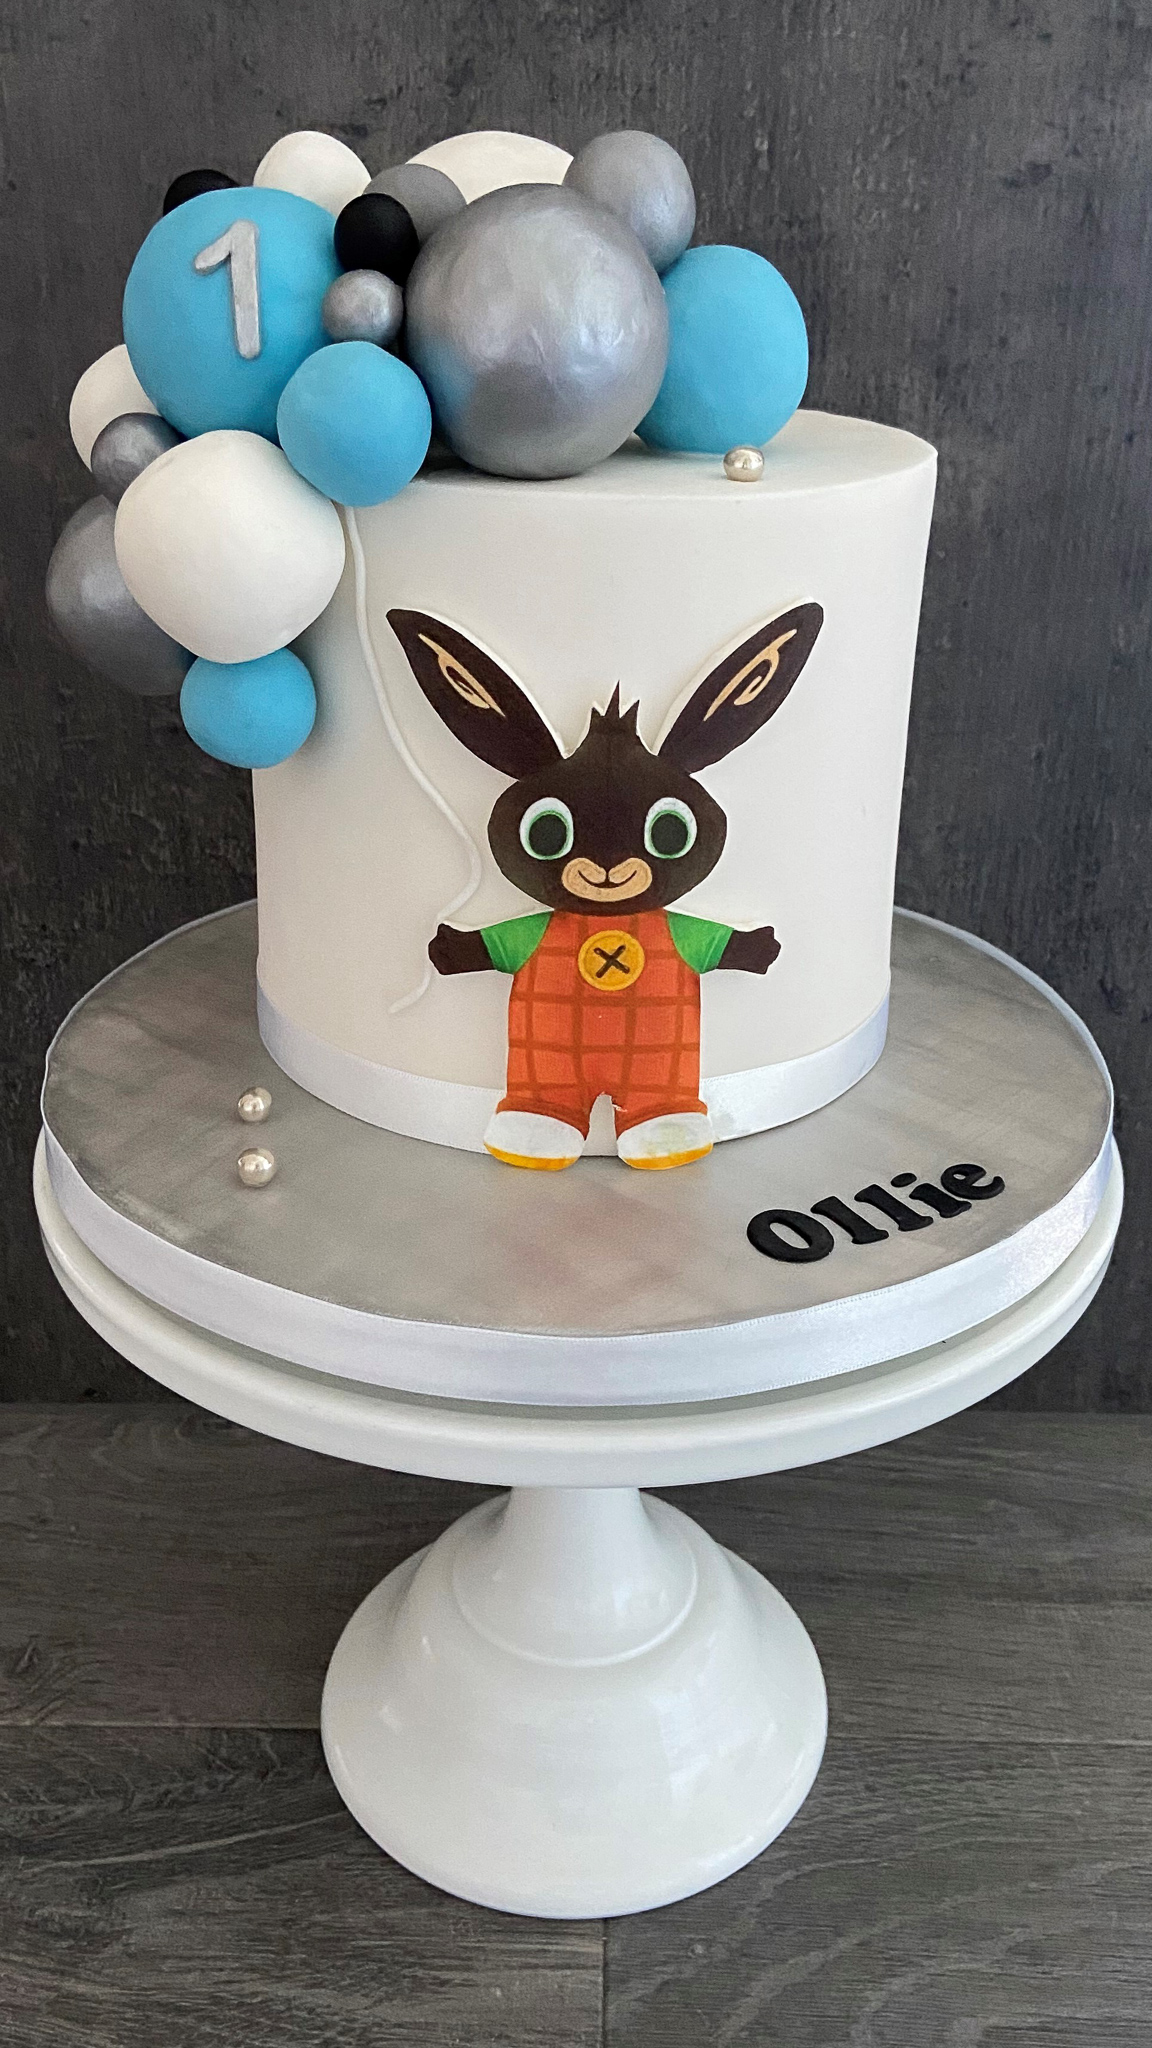 Bunny and balloons birthday cake